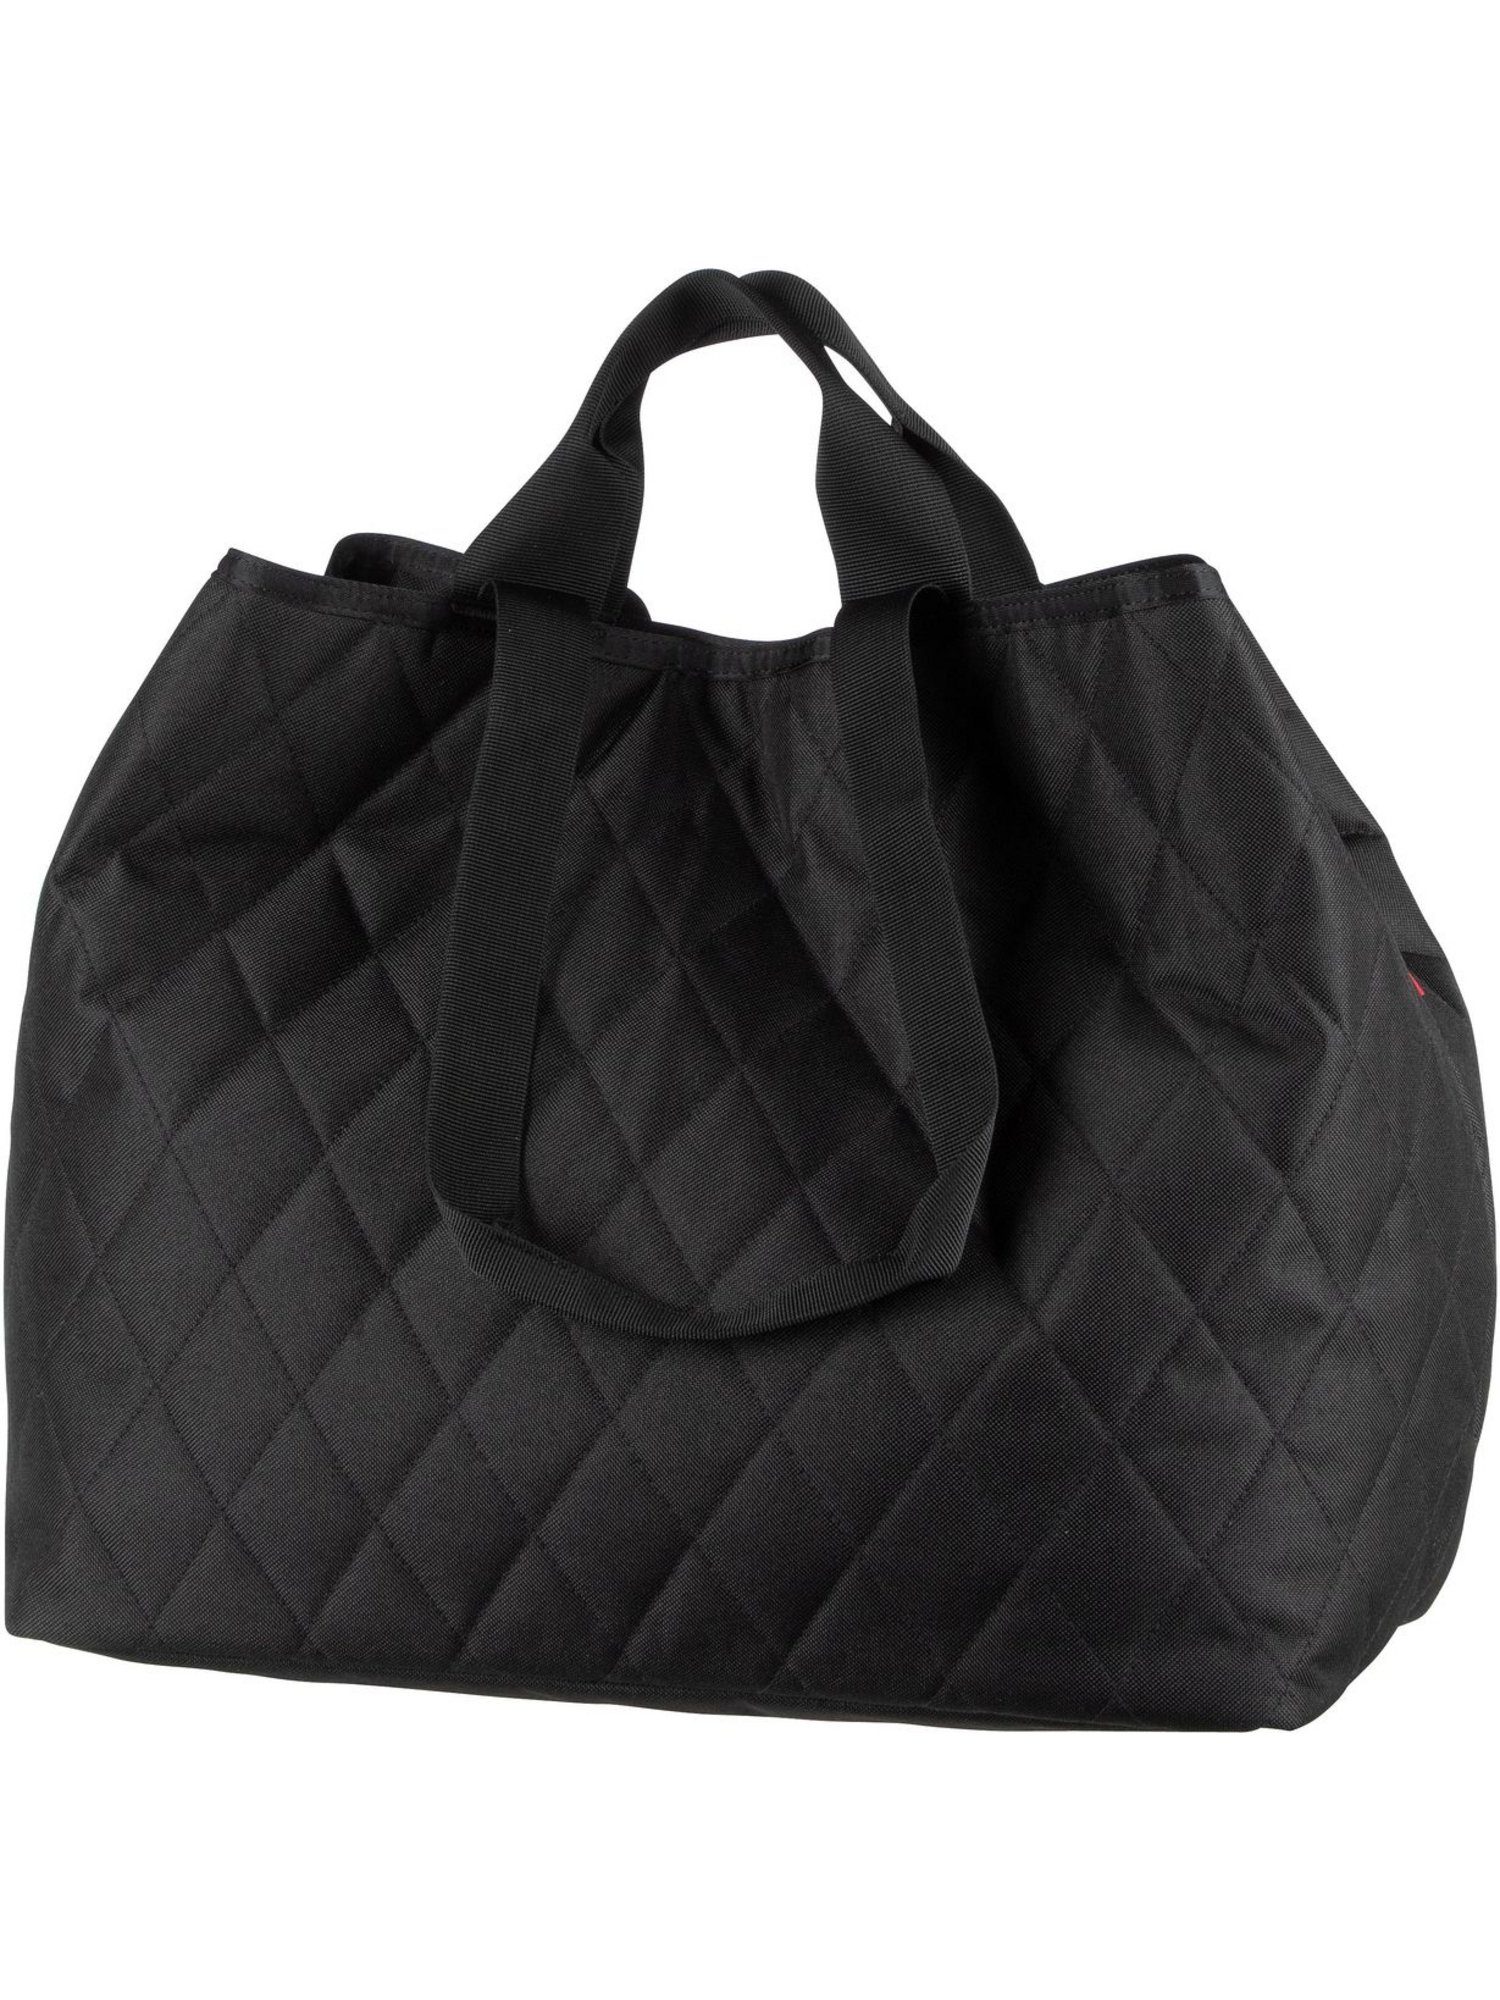 REISENTHEL® Shopper classic XL shopper Rhombus Black